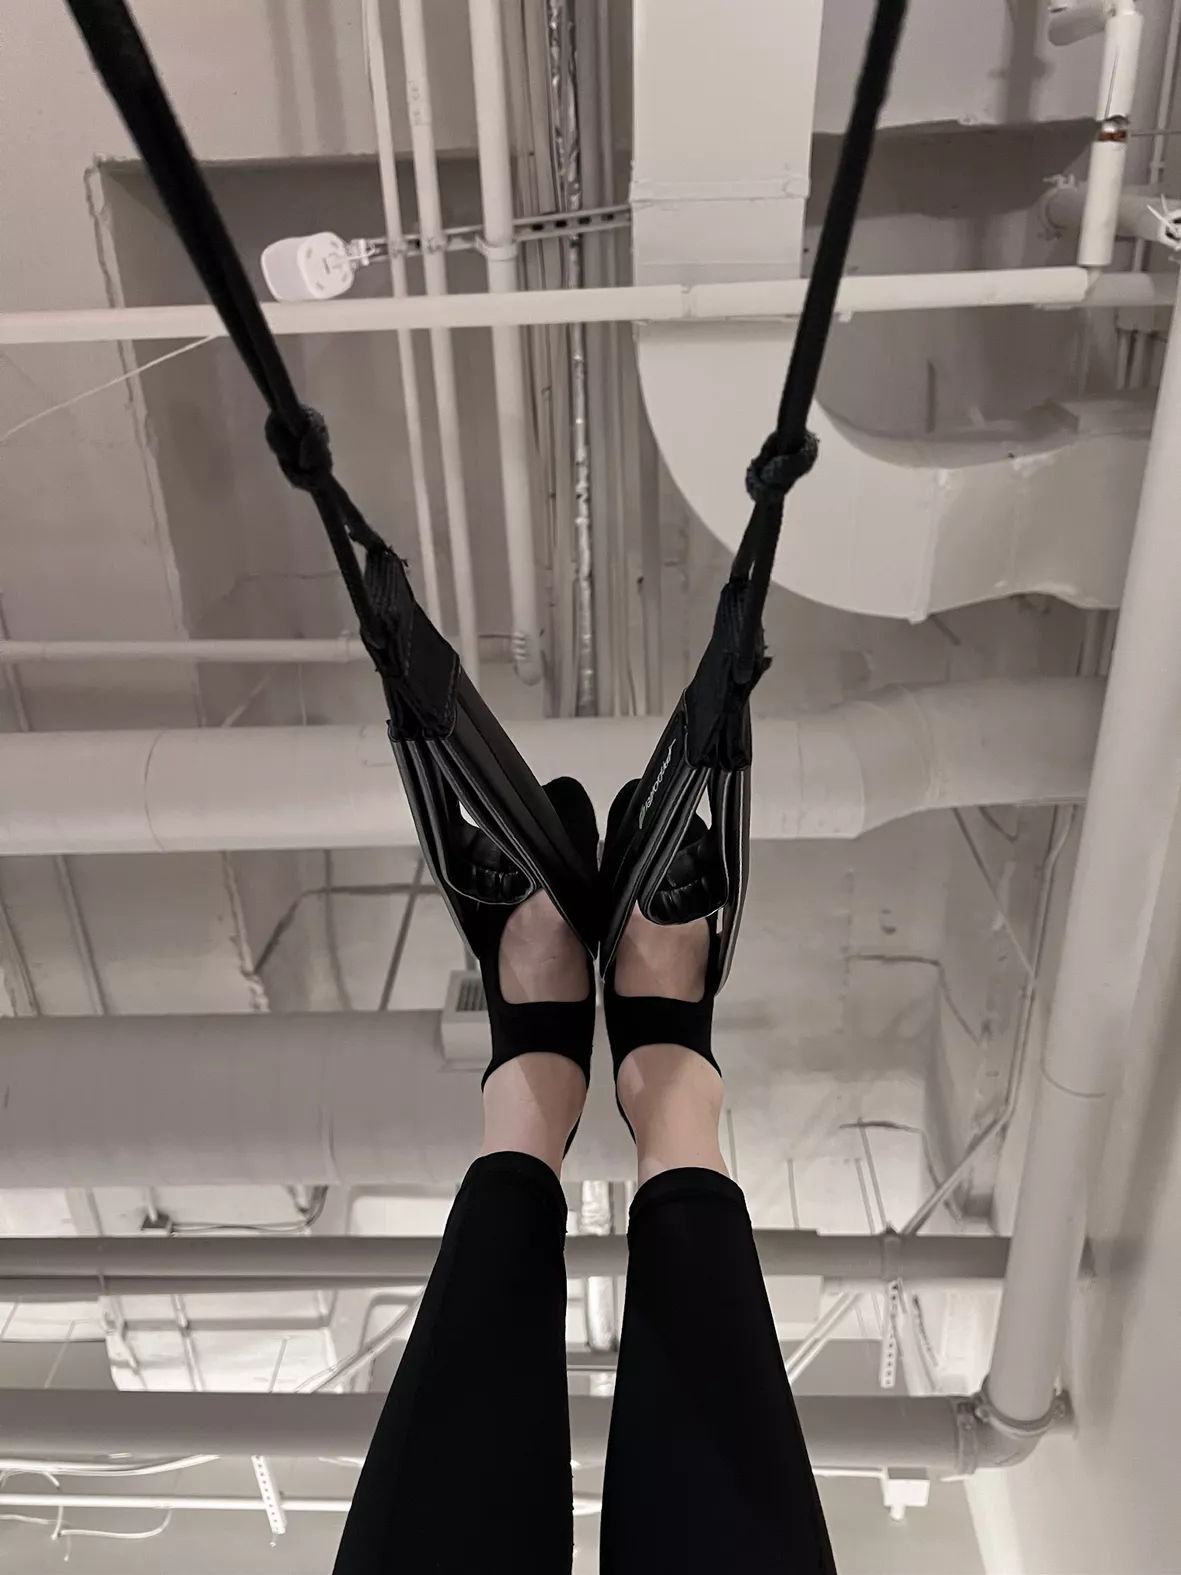 LA ACTIVE Grip Socks - 3 Pairs - Yoga Pilates Barre Ballet Non Slip Crew  Hospital